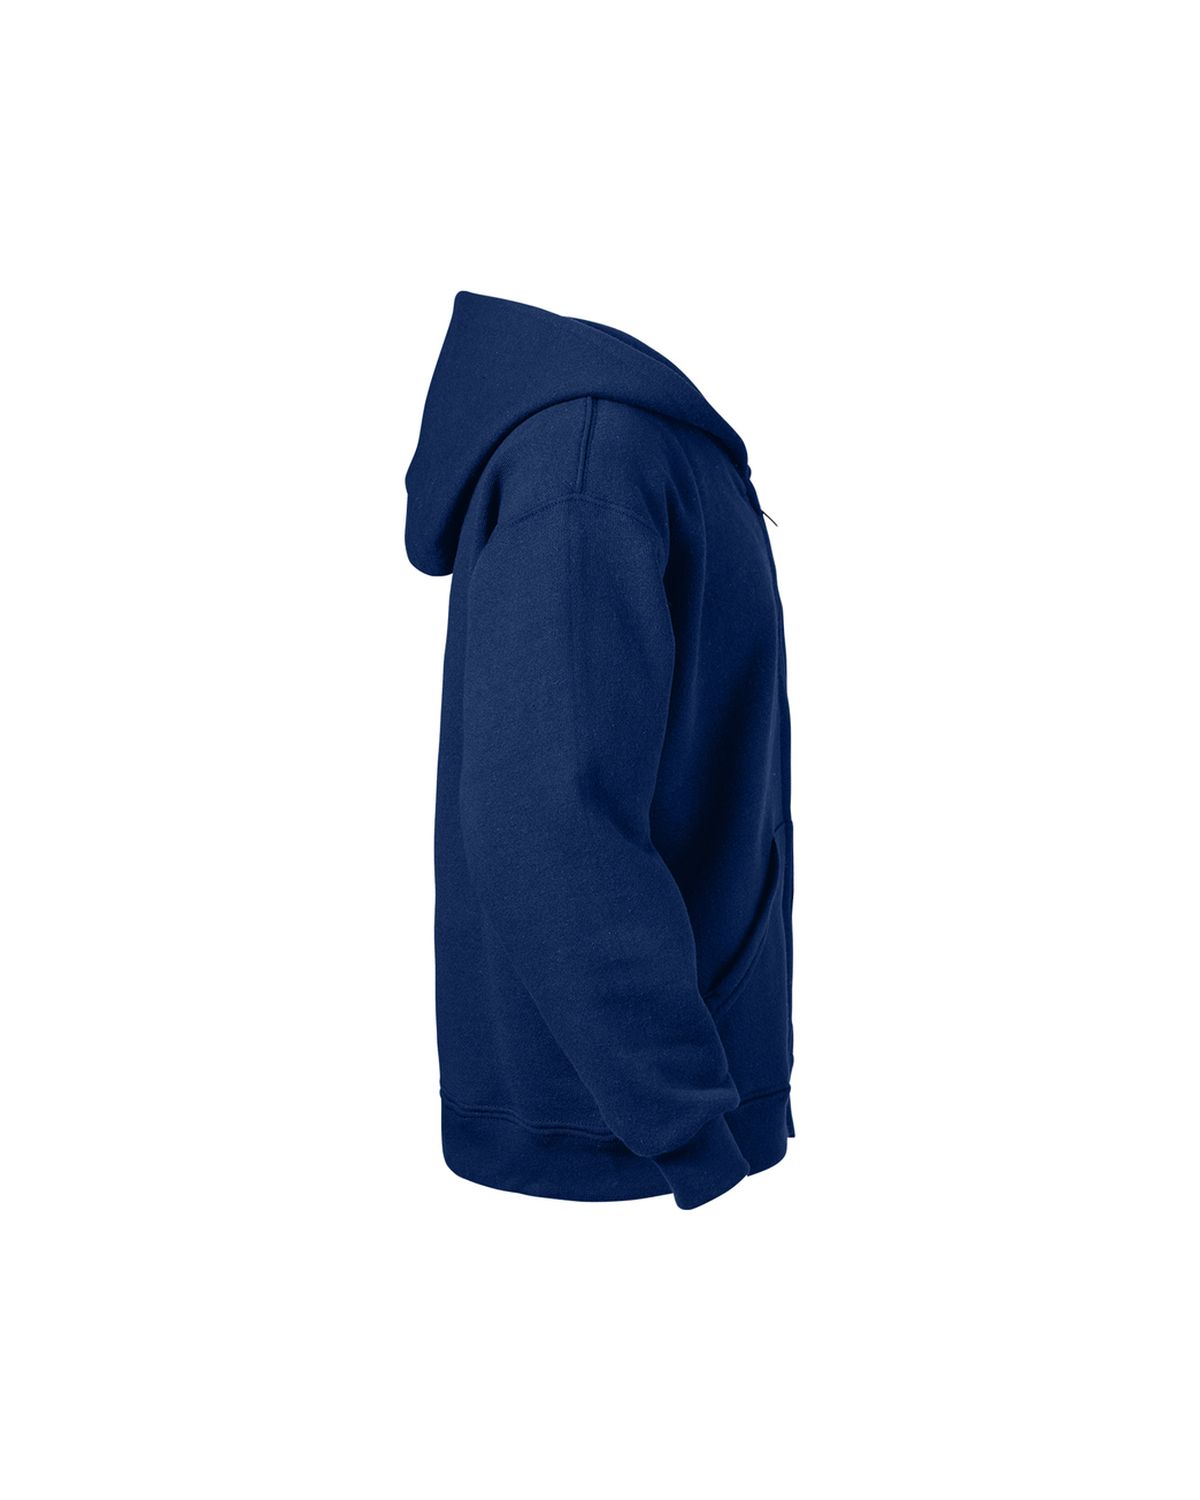 'Soffe B9078 Youth Classic Zip Hooded Sweatshirt'